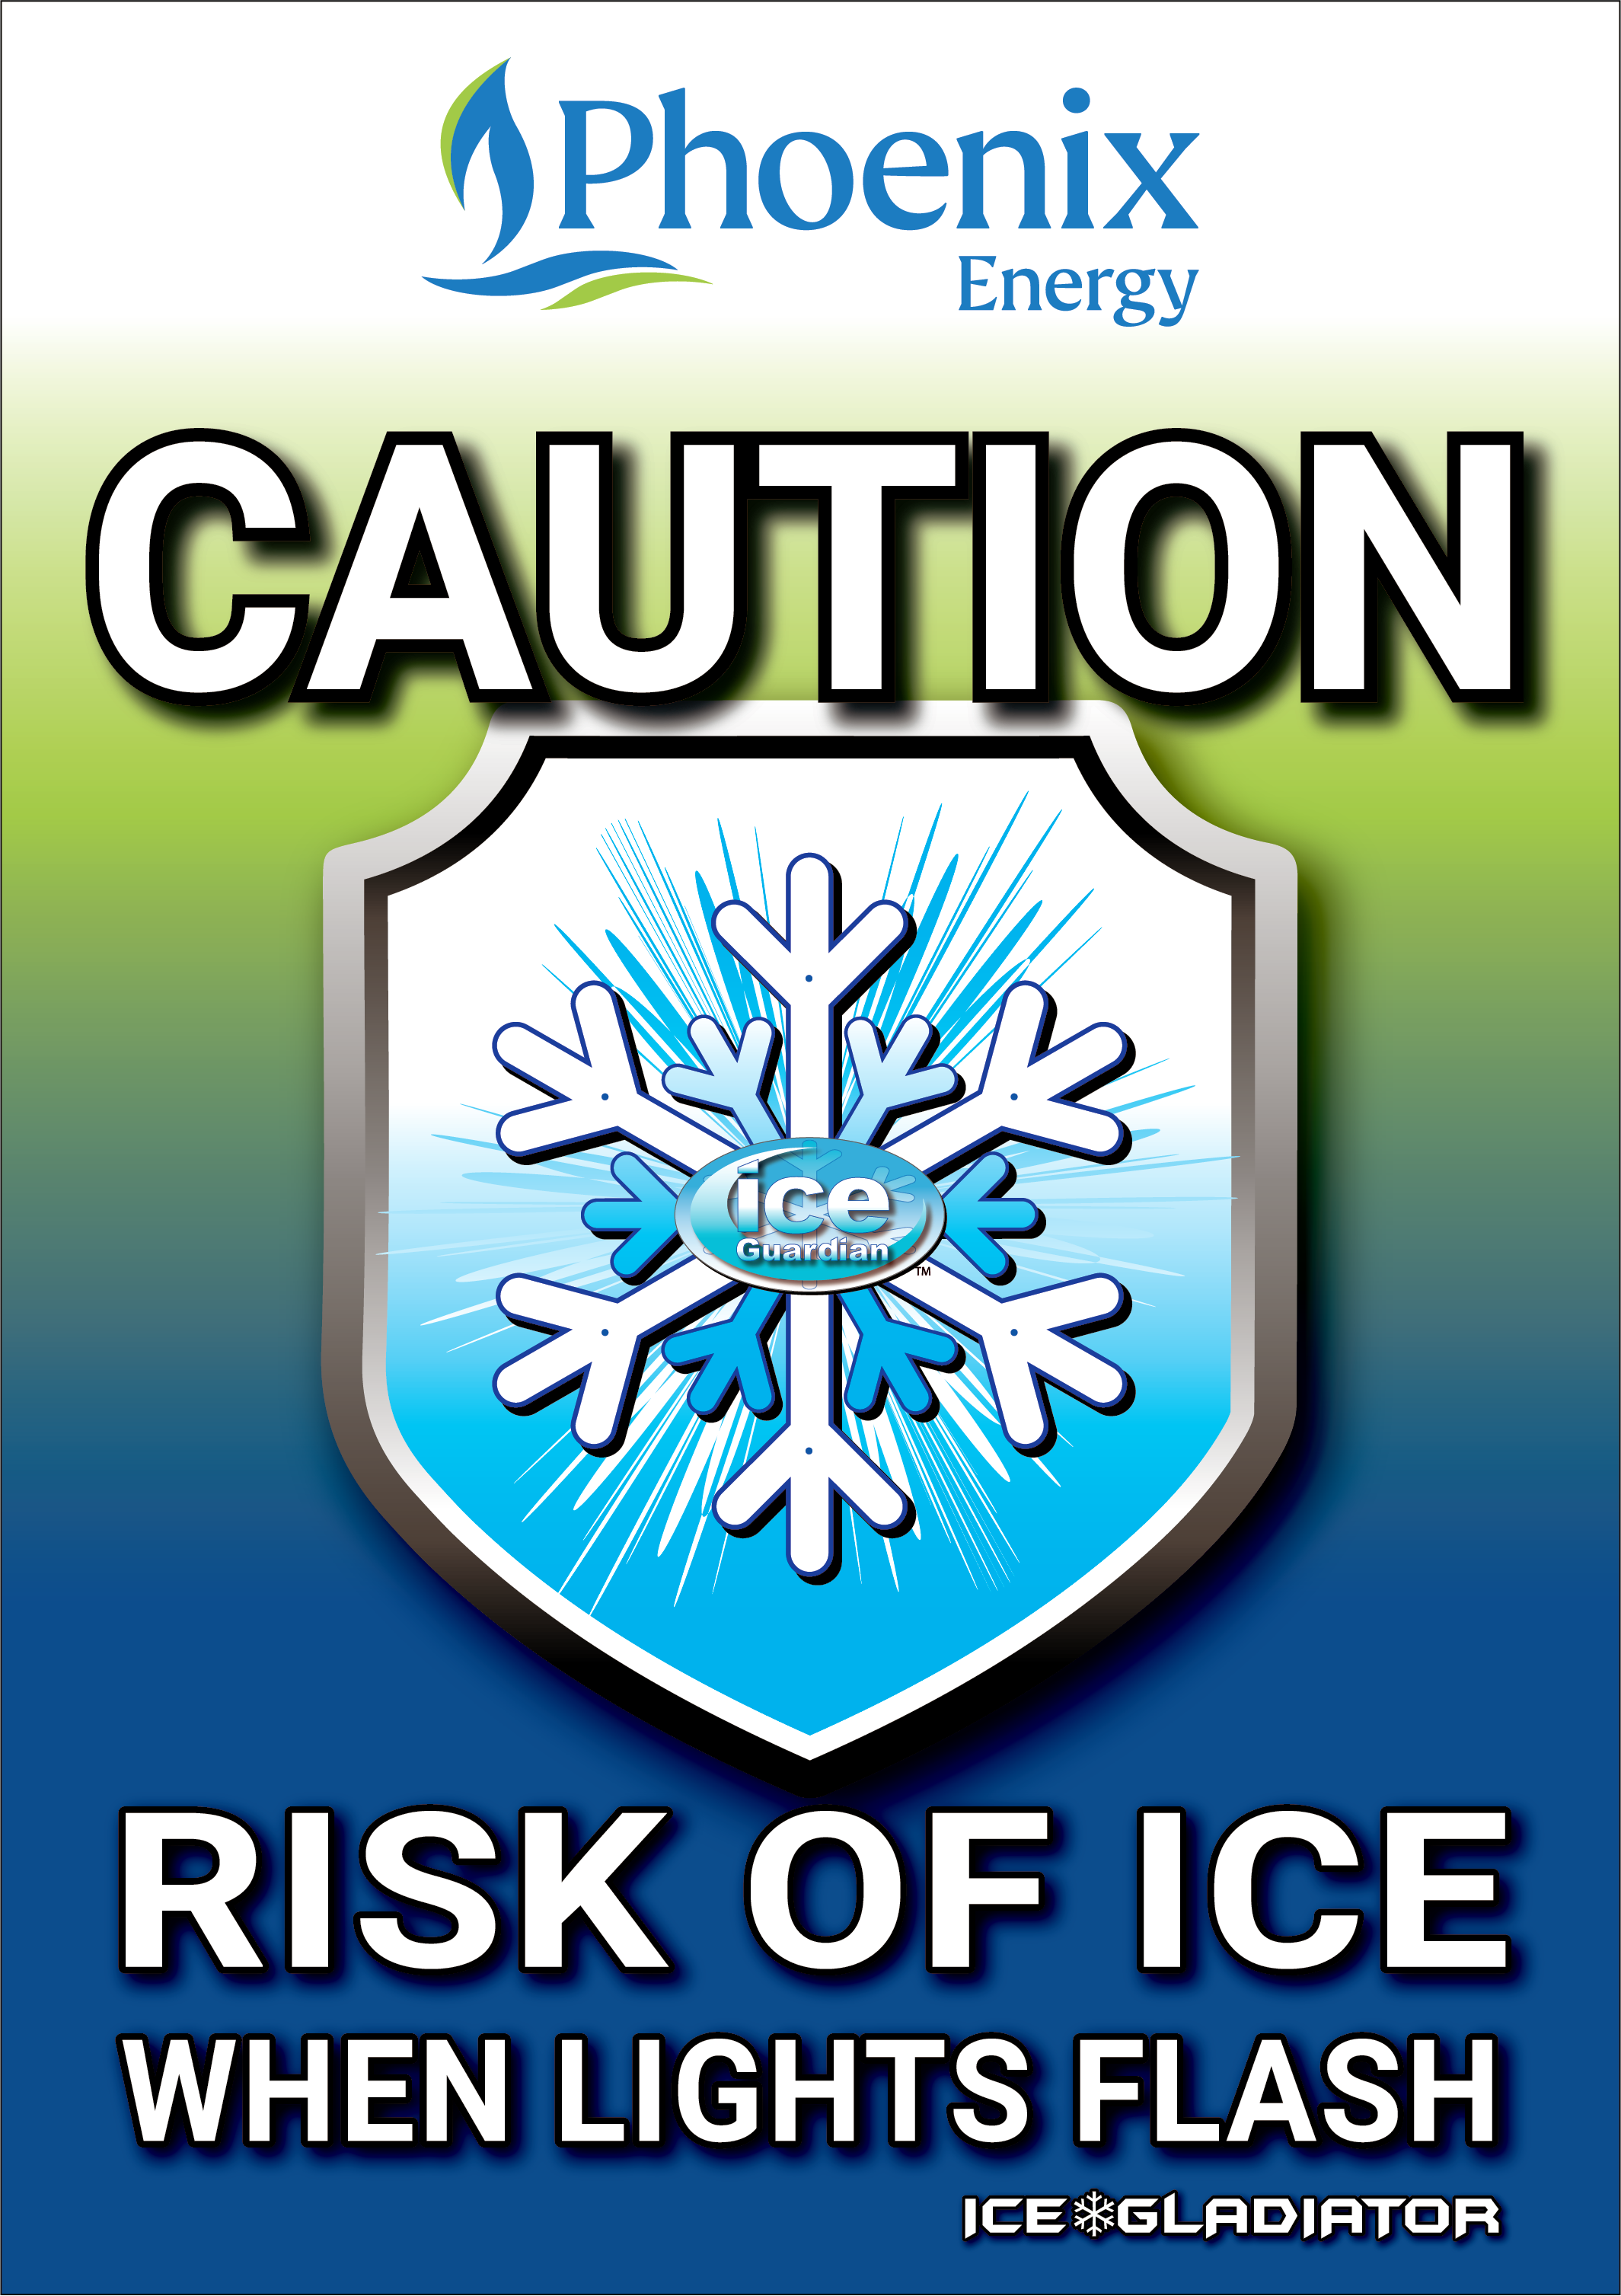 Ice Warning Sign - Phoenix